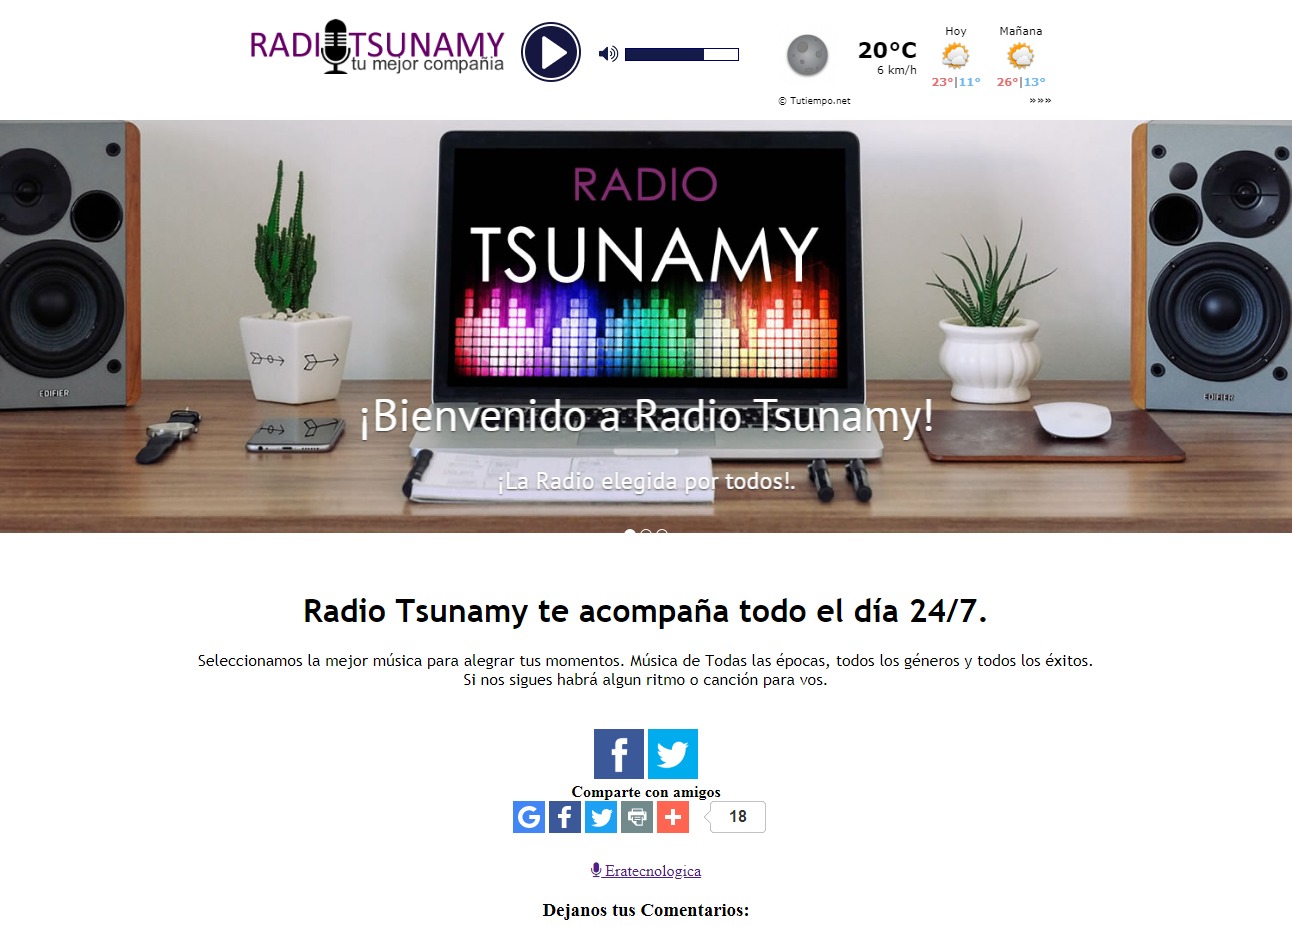 Radio Tsunamy